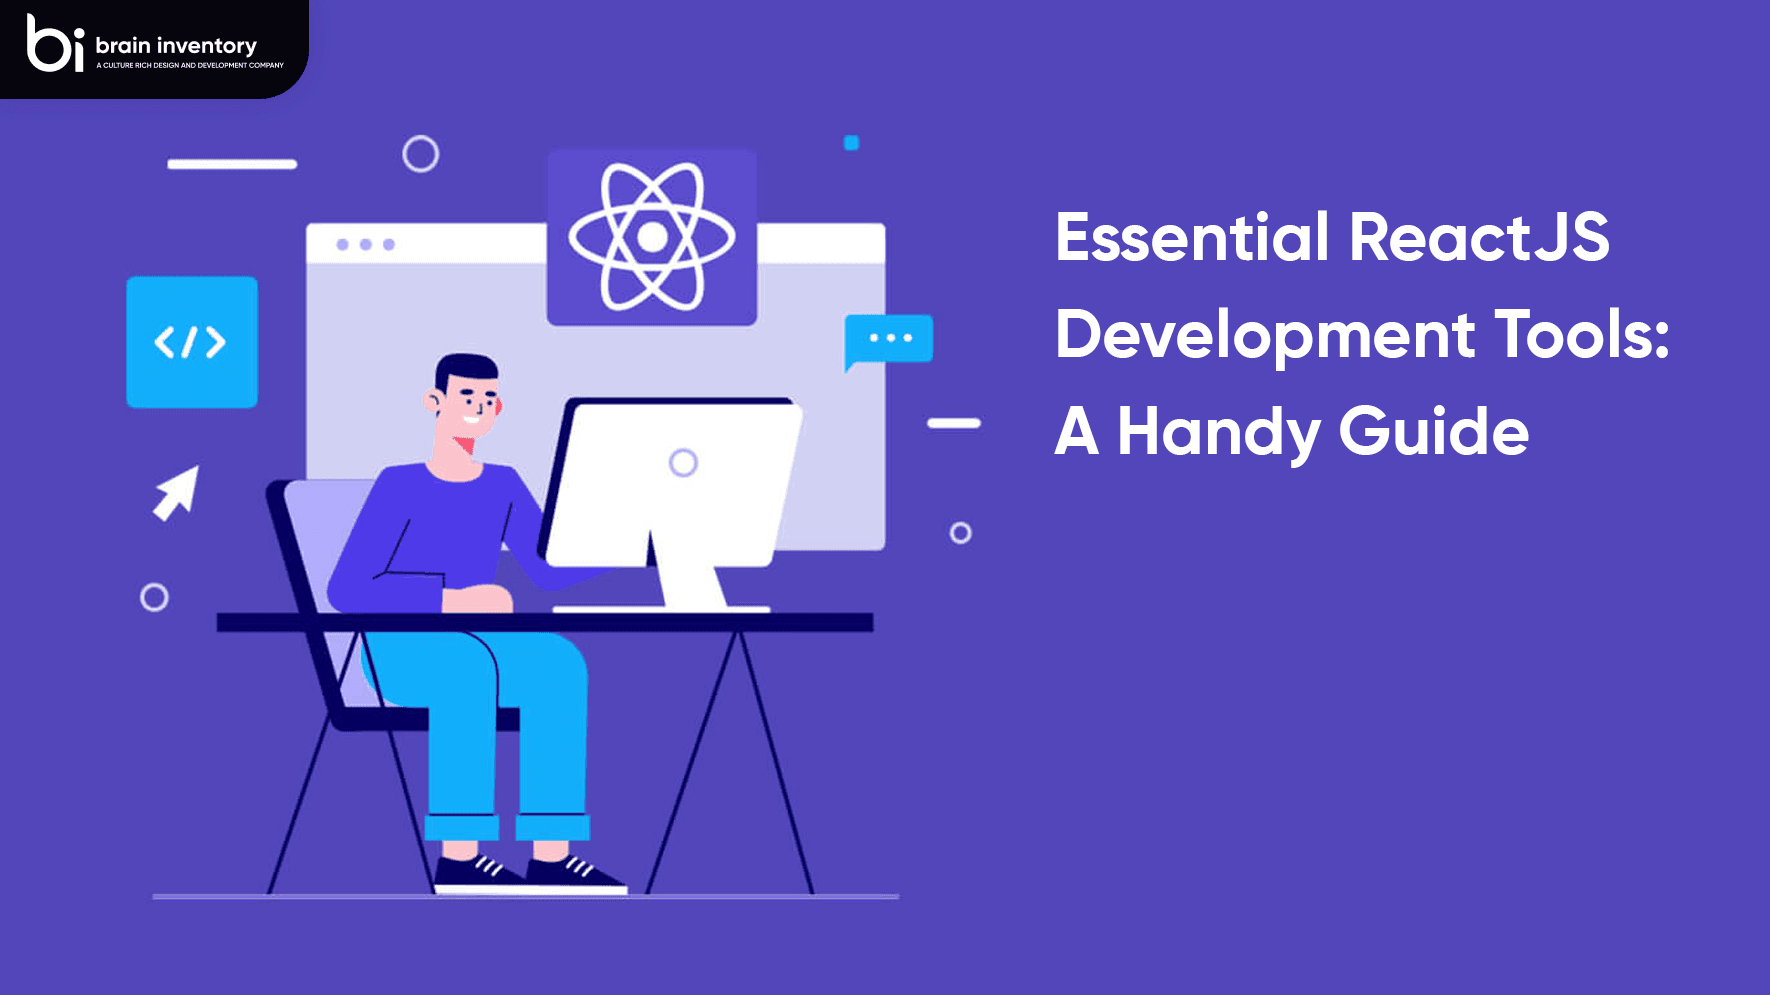 Essential ReactJS Development Tools: A Handy Guide